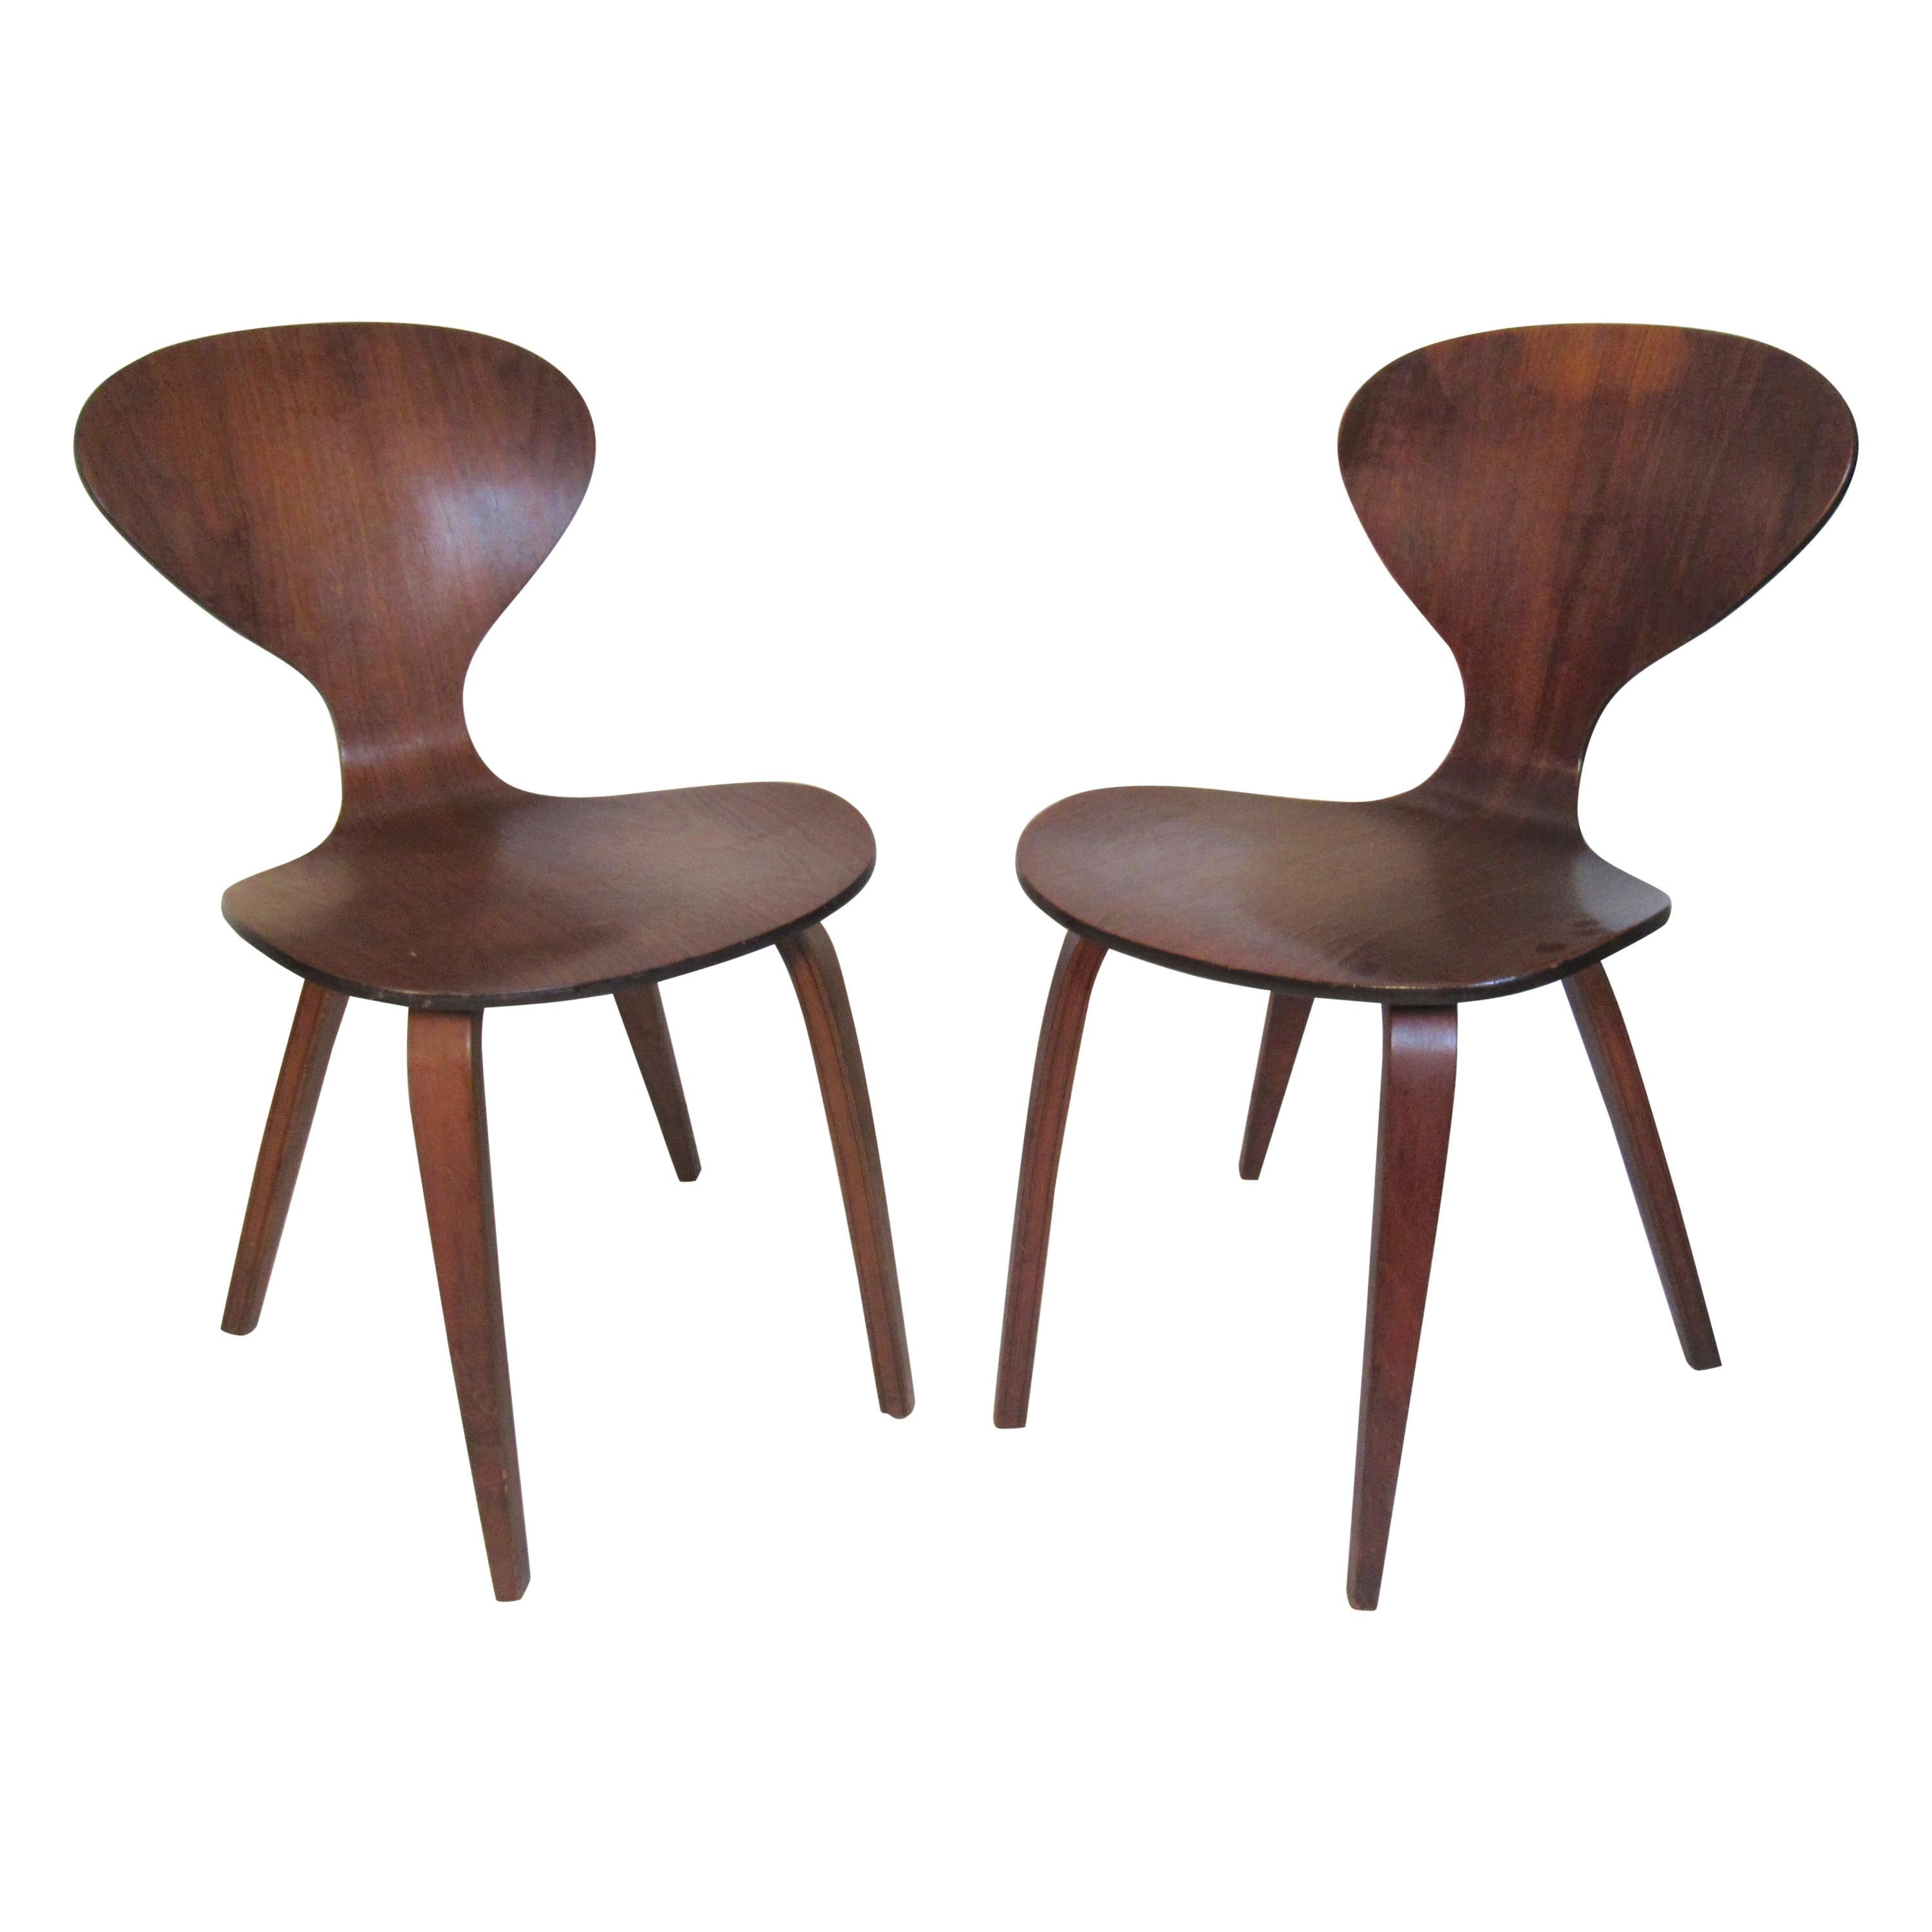 Pair of Midcentury Cherner Chairs